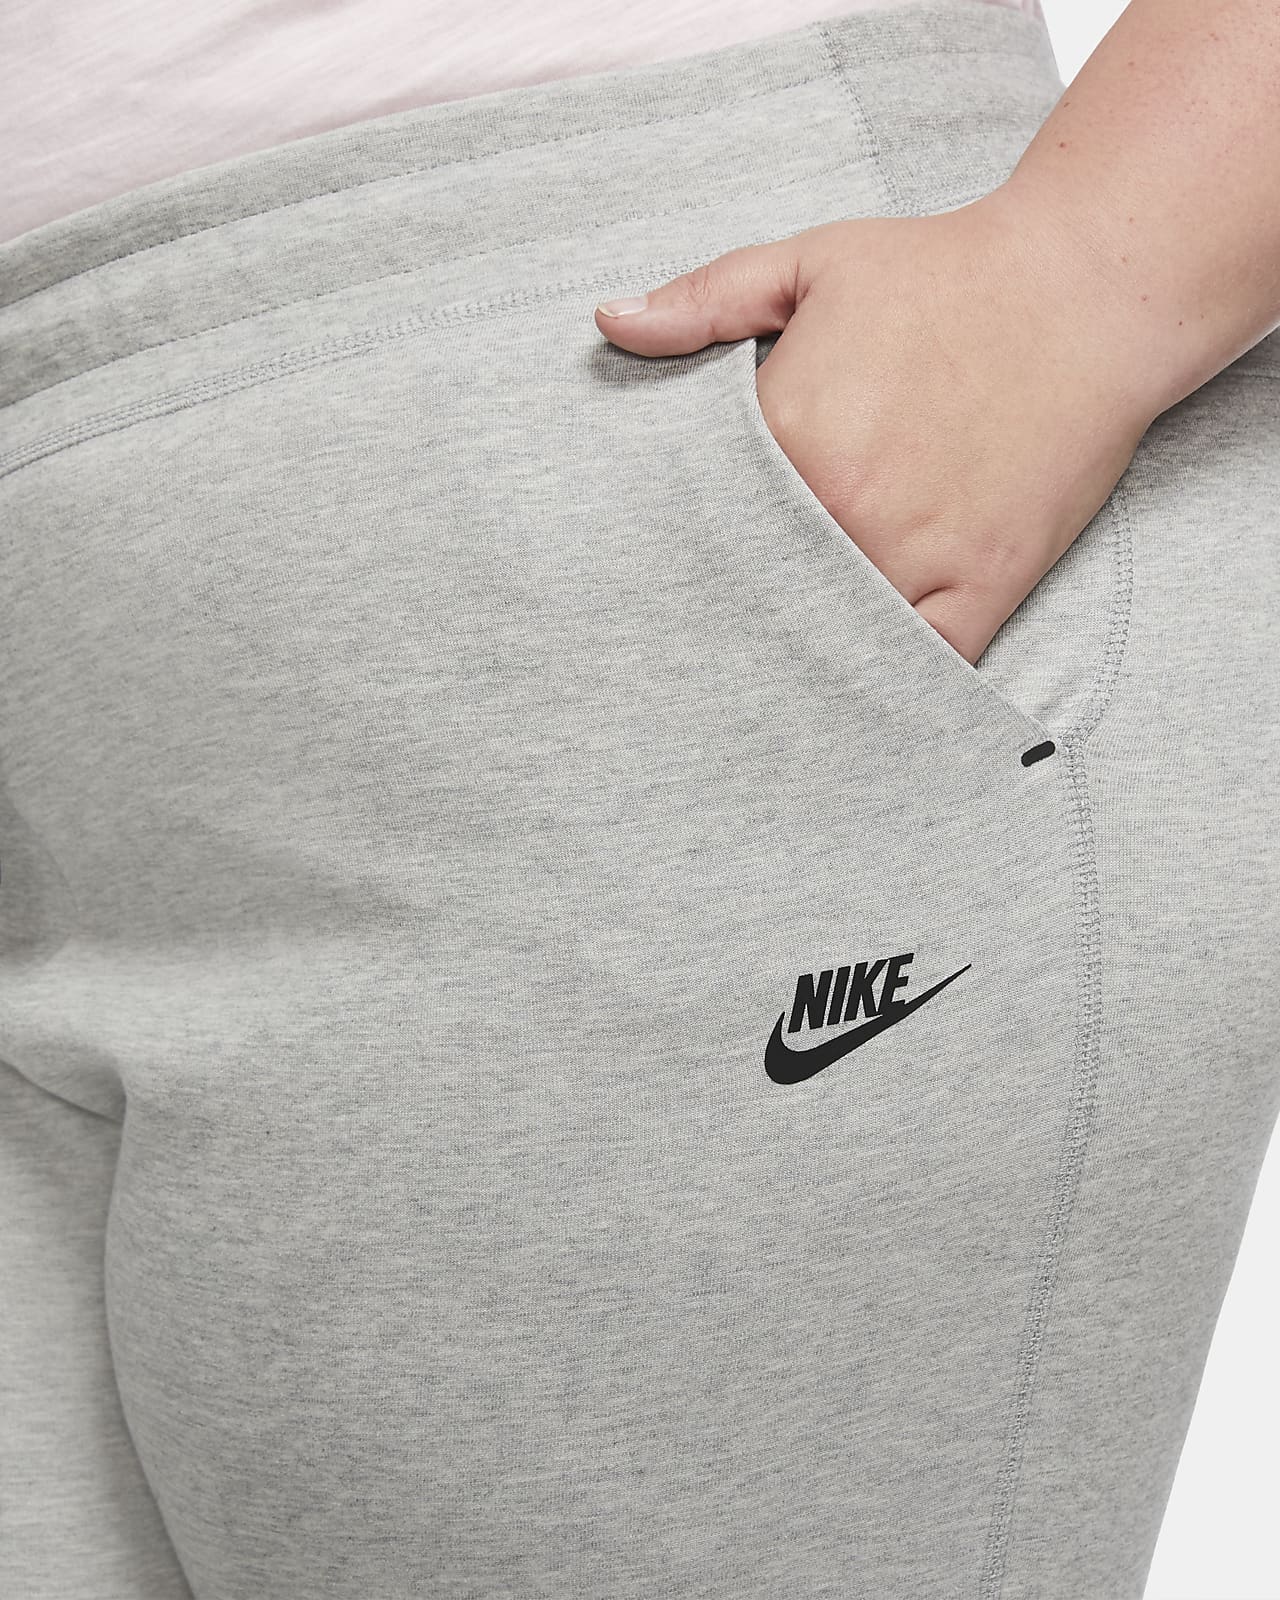 Vaderlijk Besparing soort Nike Sportswear Tech Fleece Damesbroek (grote maten). Nike BE